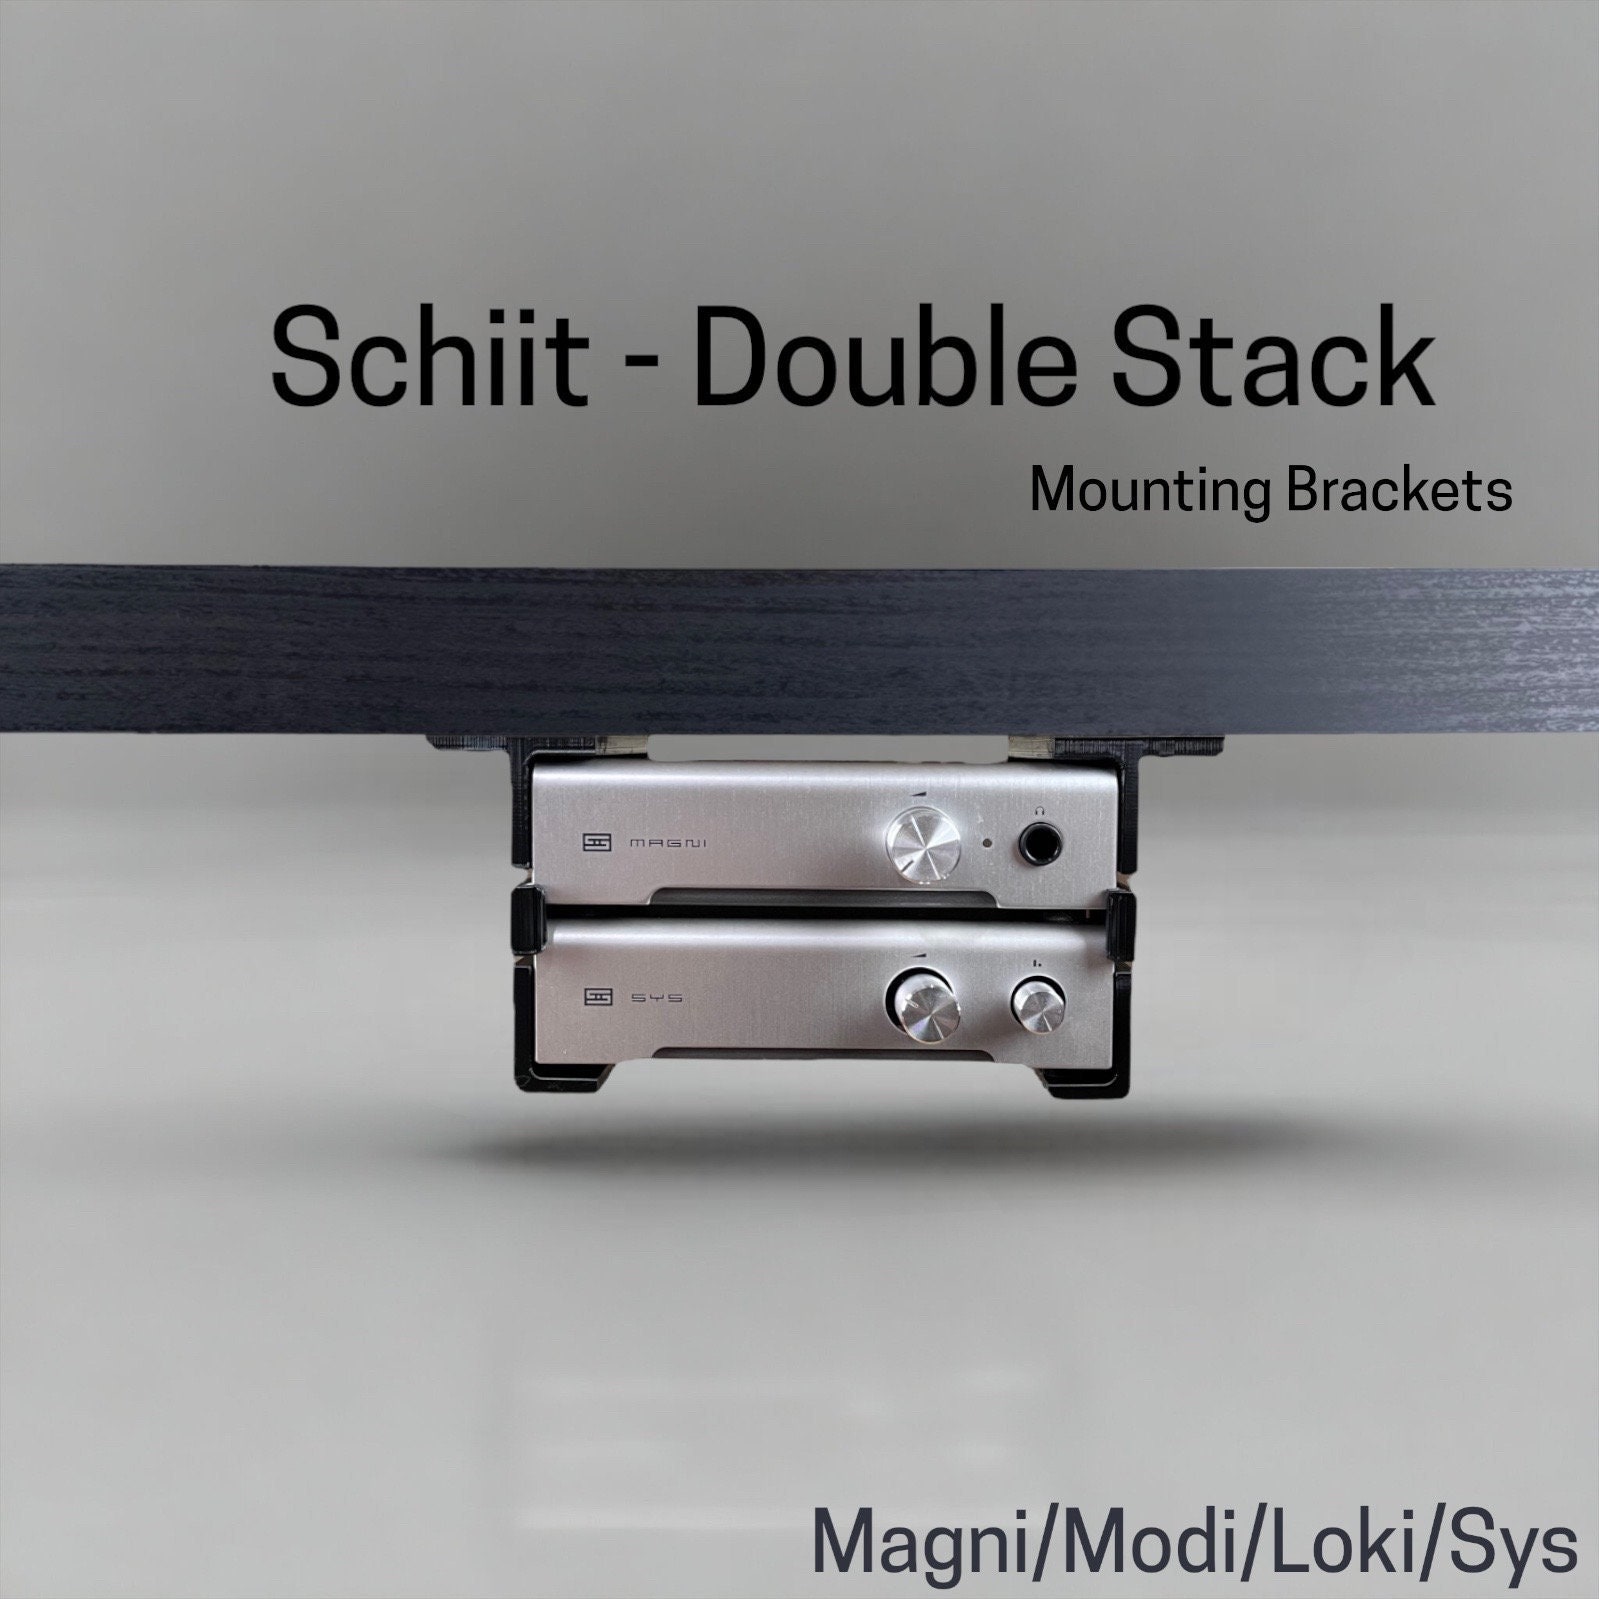 Focusrite Scarlett 2i2 3rd Generation Desk Mounting Bracket Reversible  Retention Security Clips Snug Fit Screws Included. 